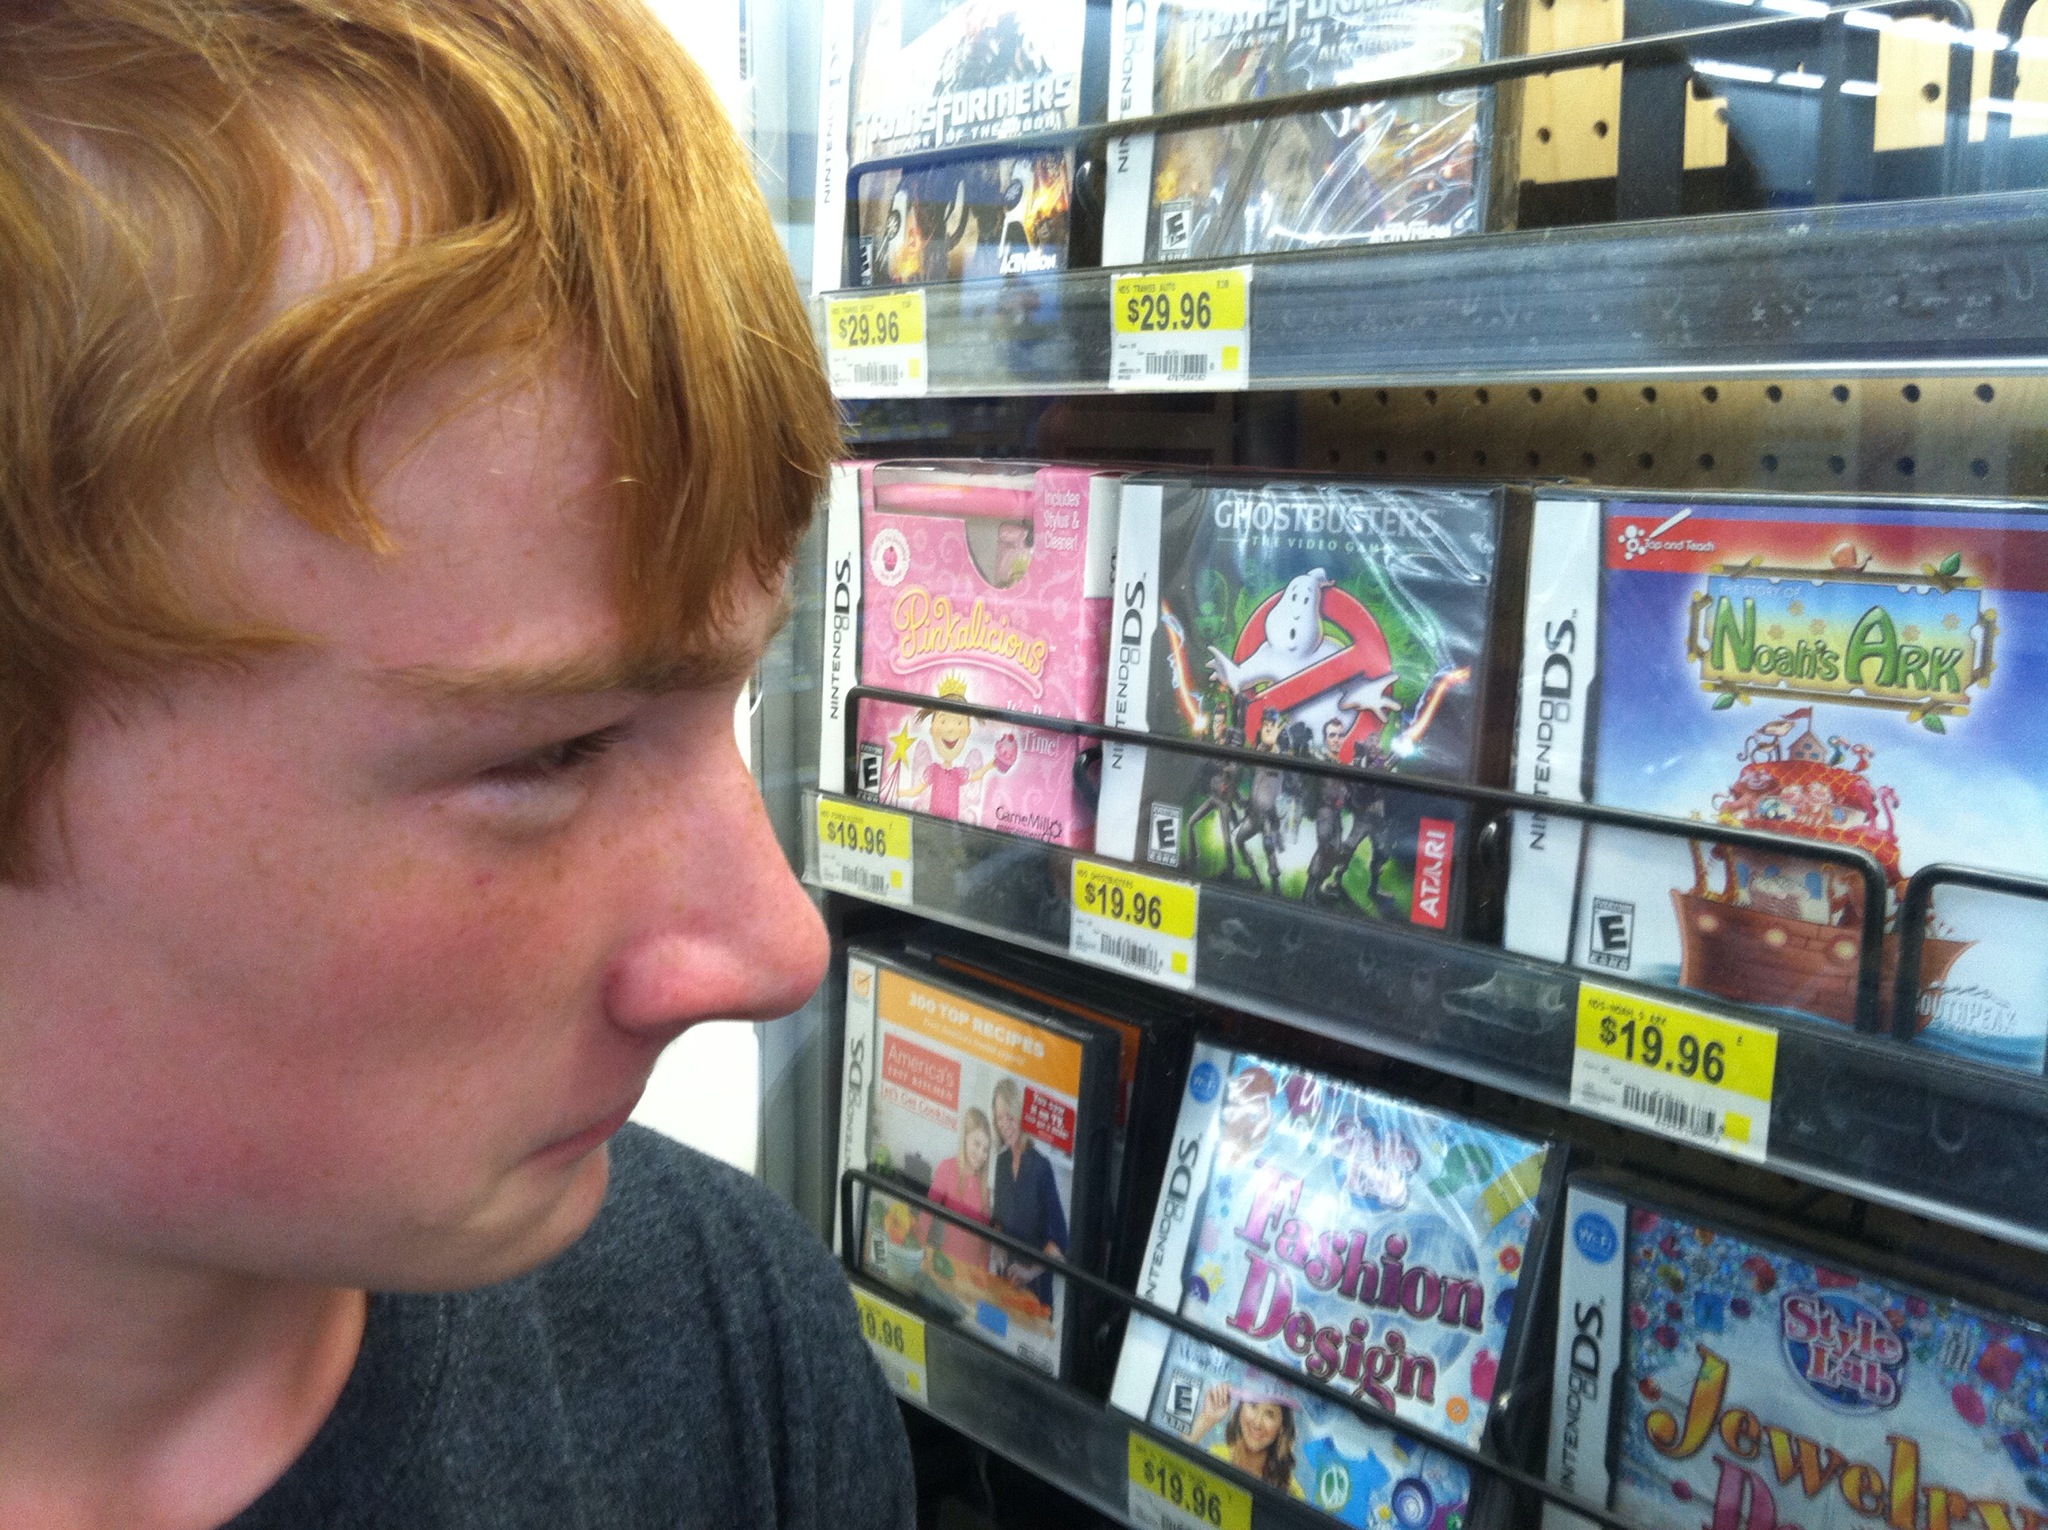 Noah staring at "Noah's Ark" for Nintendo DS